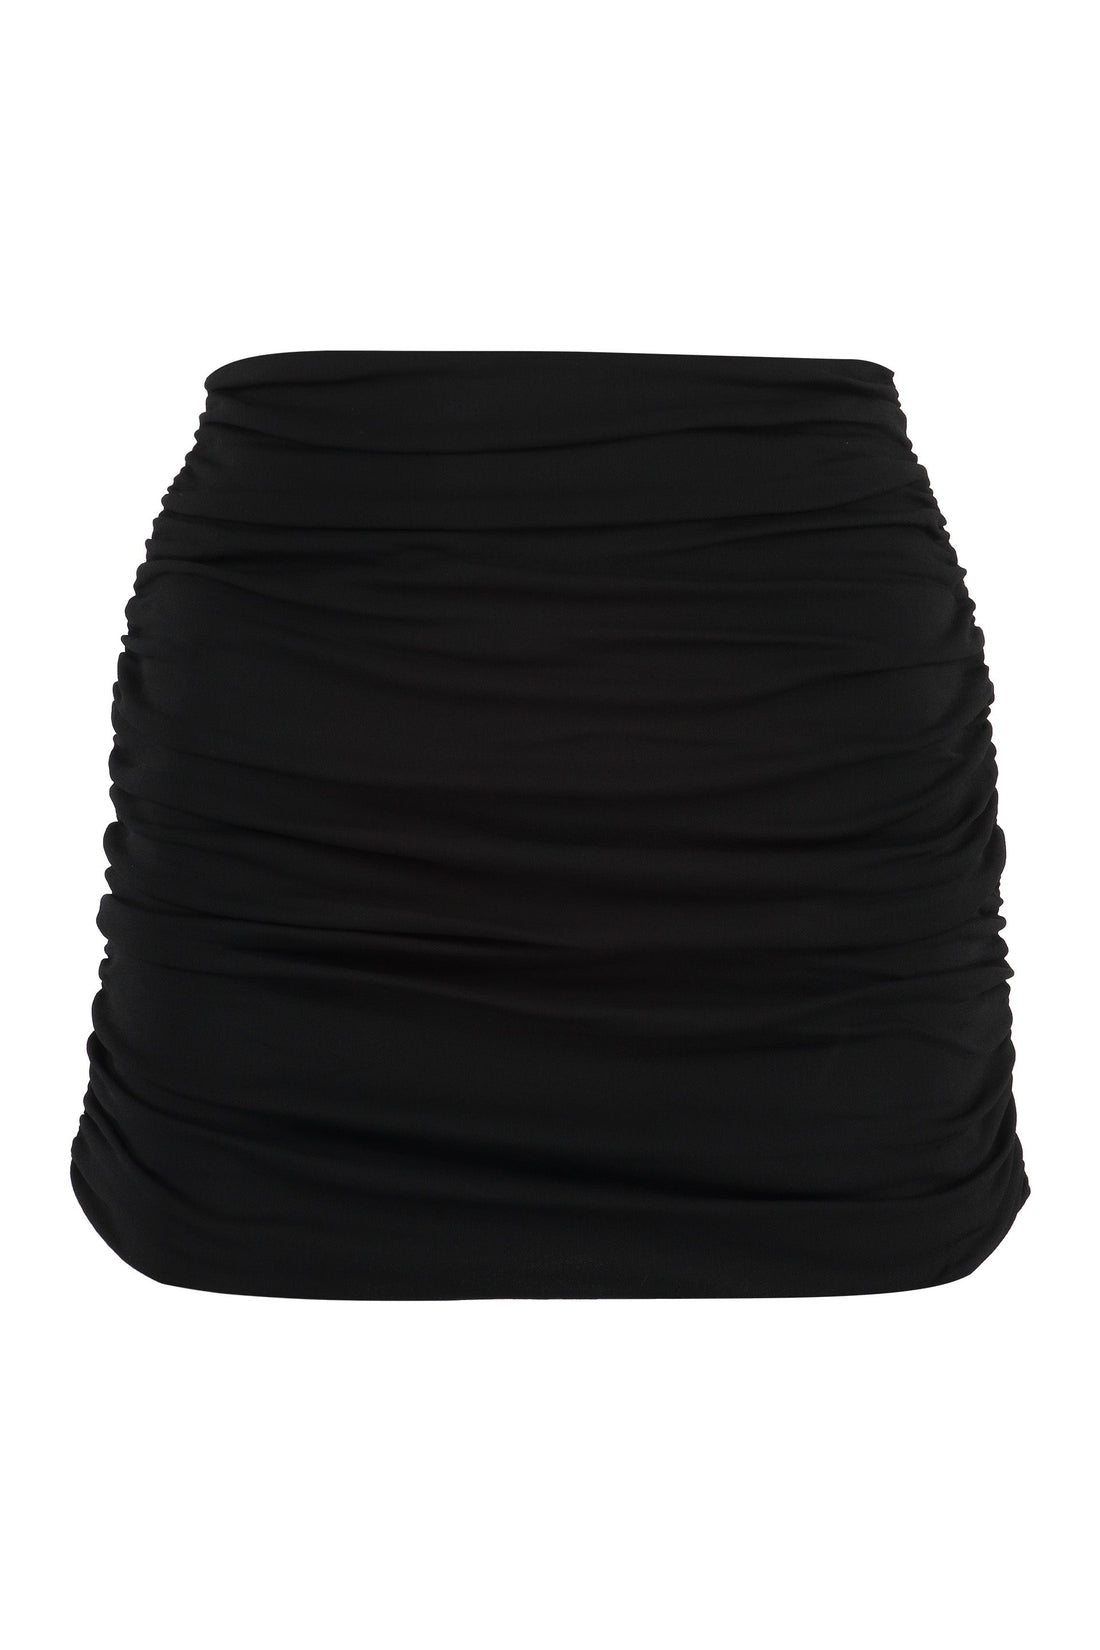 Tory Burch-OUTLET-SALE-Jersey stretch skirt-ARCHIVIST